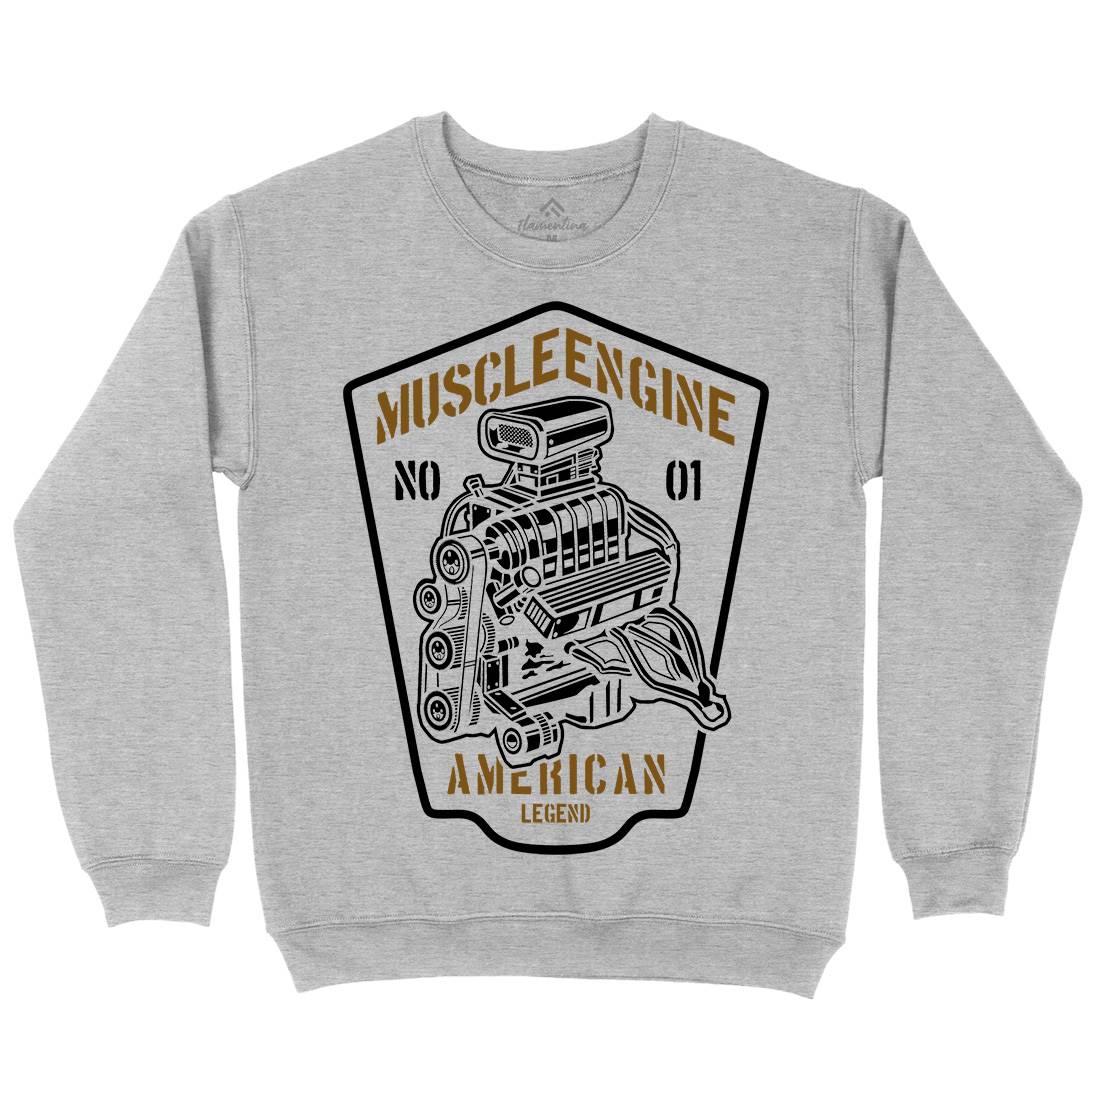 Muscle Engine Kids Crew Neck Sweatshirt Cars B234